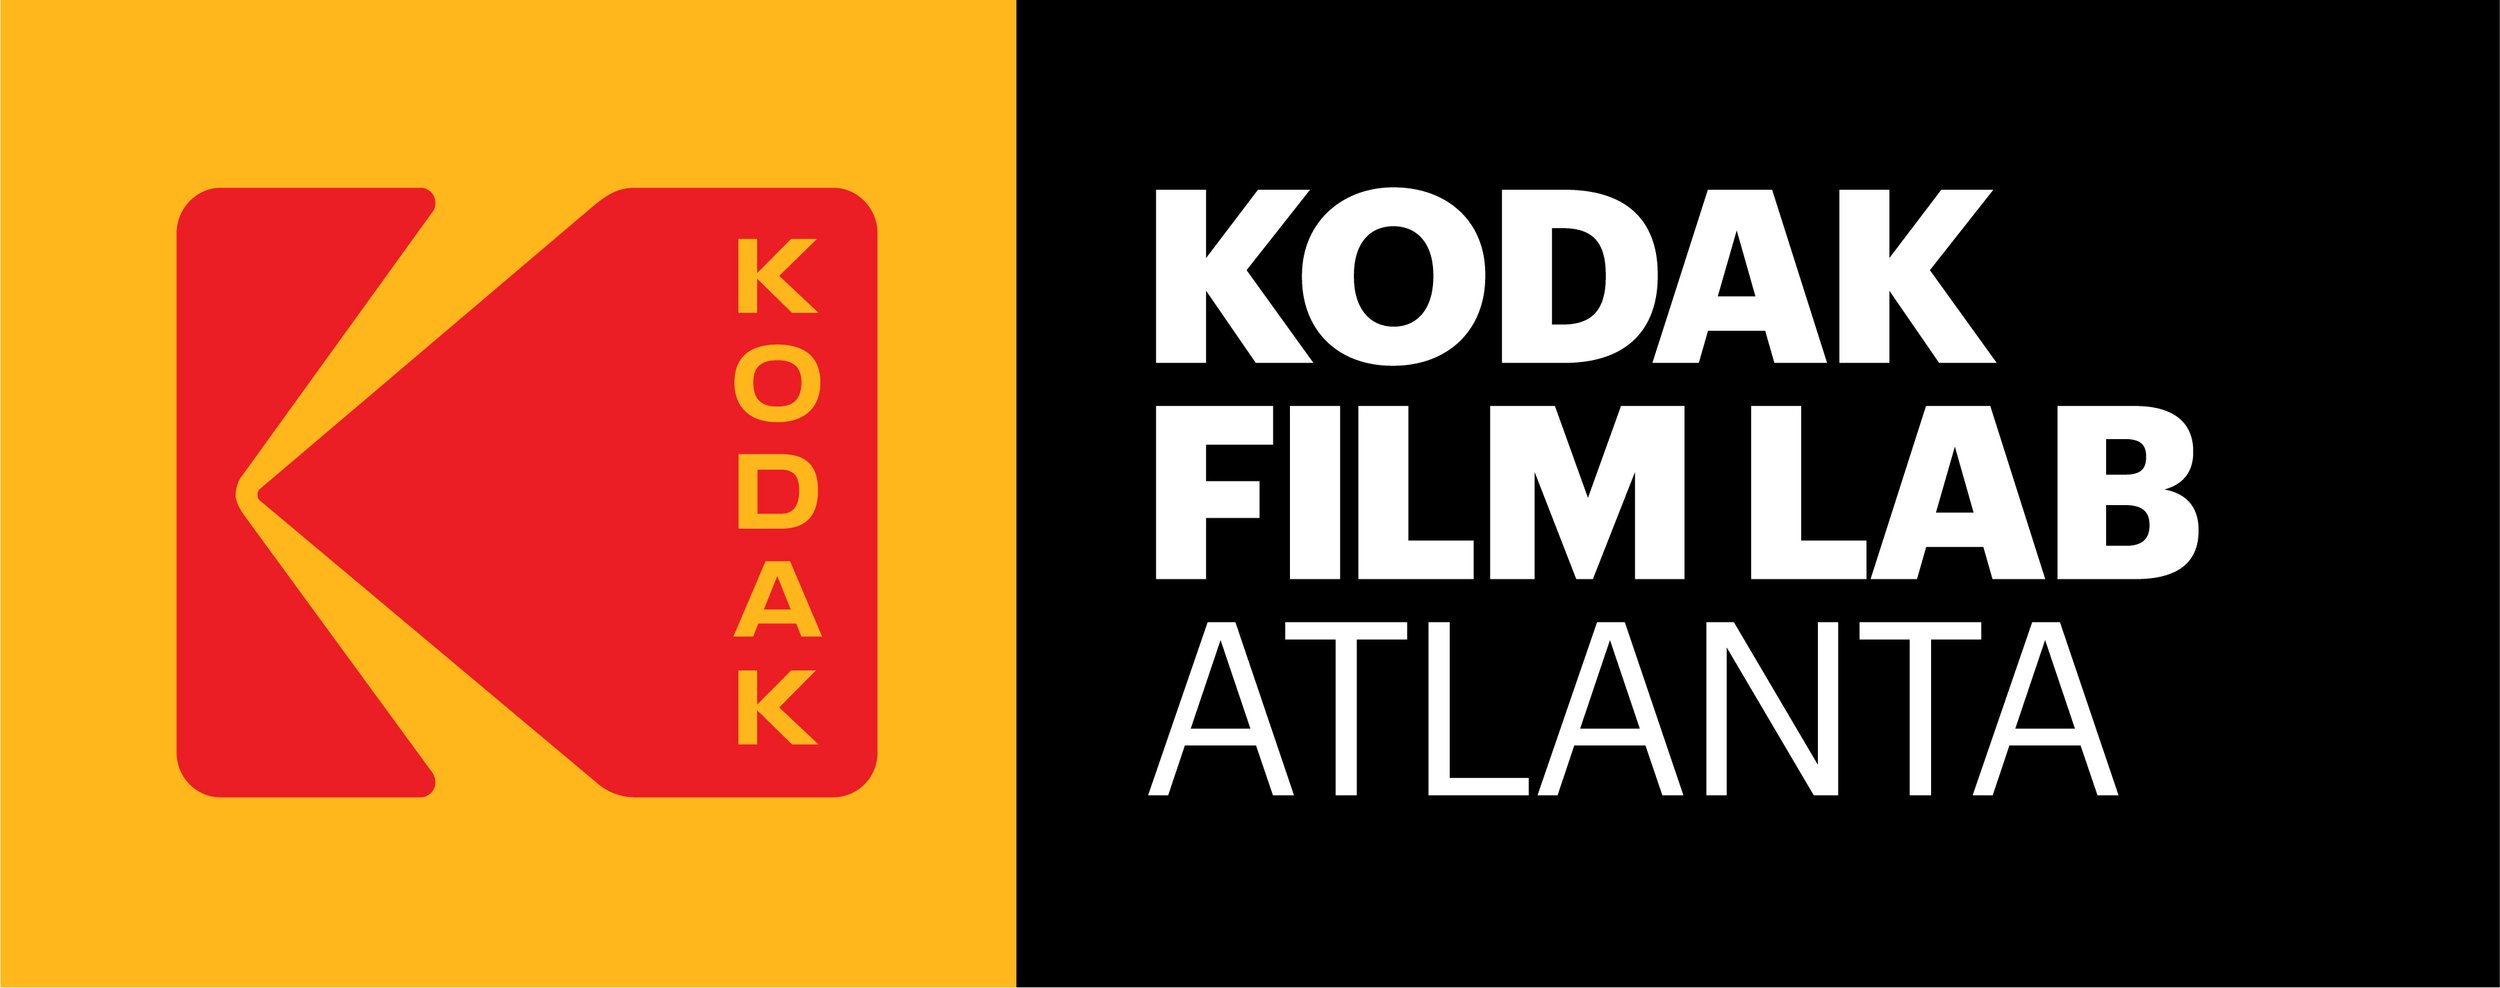 Kodak+Film+Lab+ATLANTA_COLOR-1.jpeg